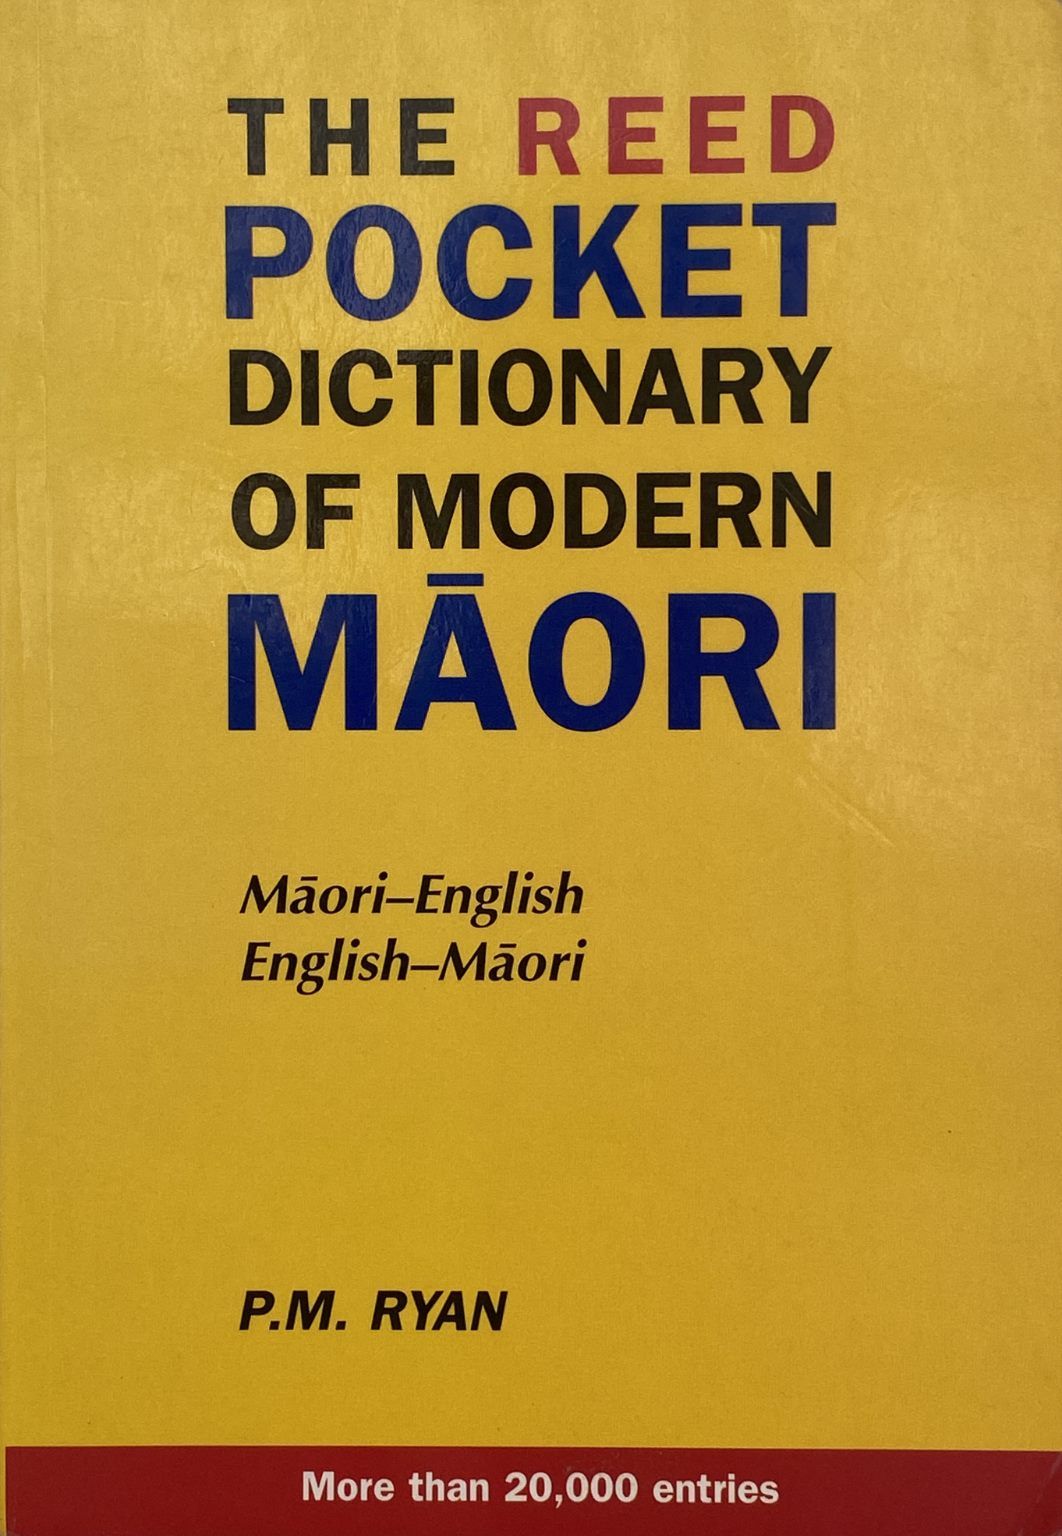 THE REED POCKET DICTIONARY OF MODERN MAORI: Maori to English section, English to Maori.